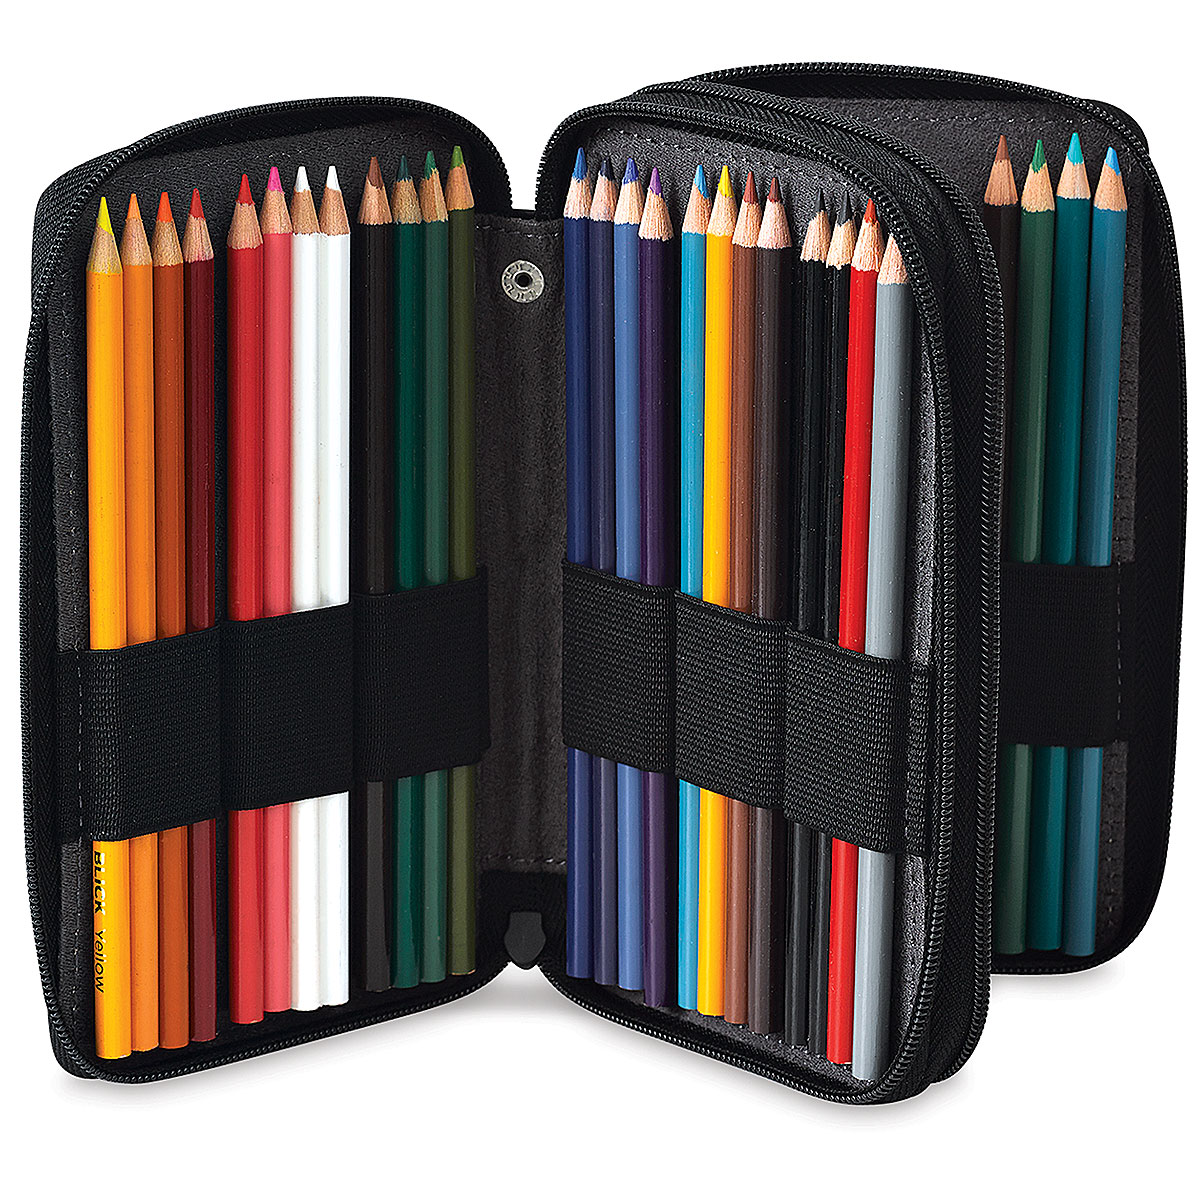 Global Art Classic Leather Pencil Cases, BLICK Art Materials